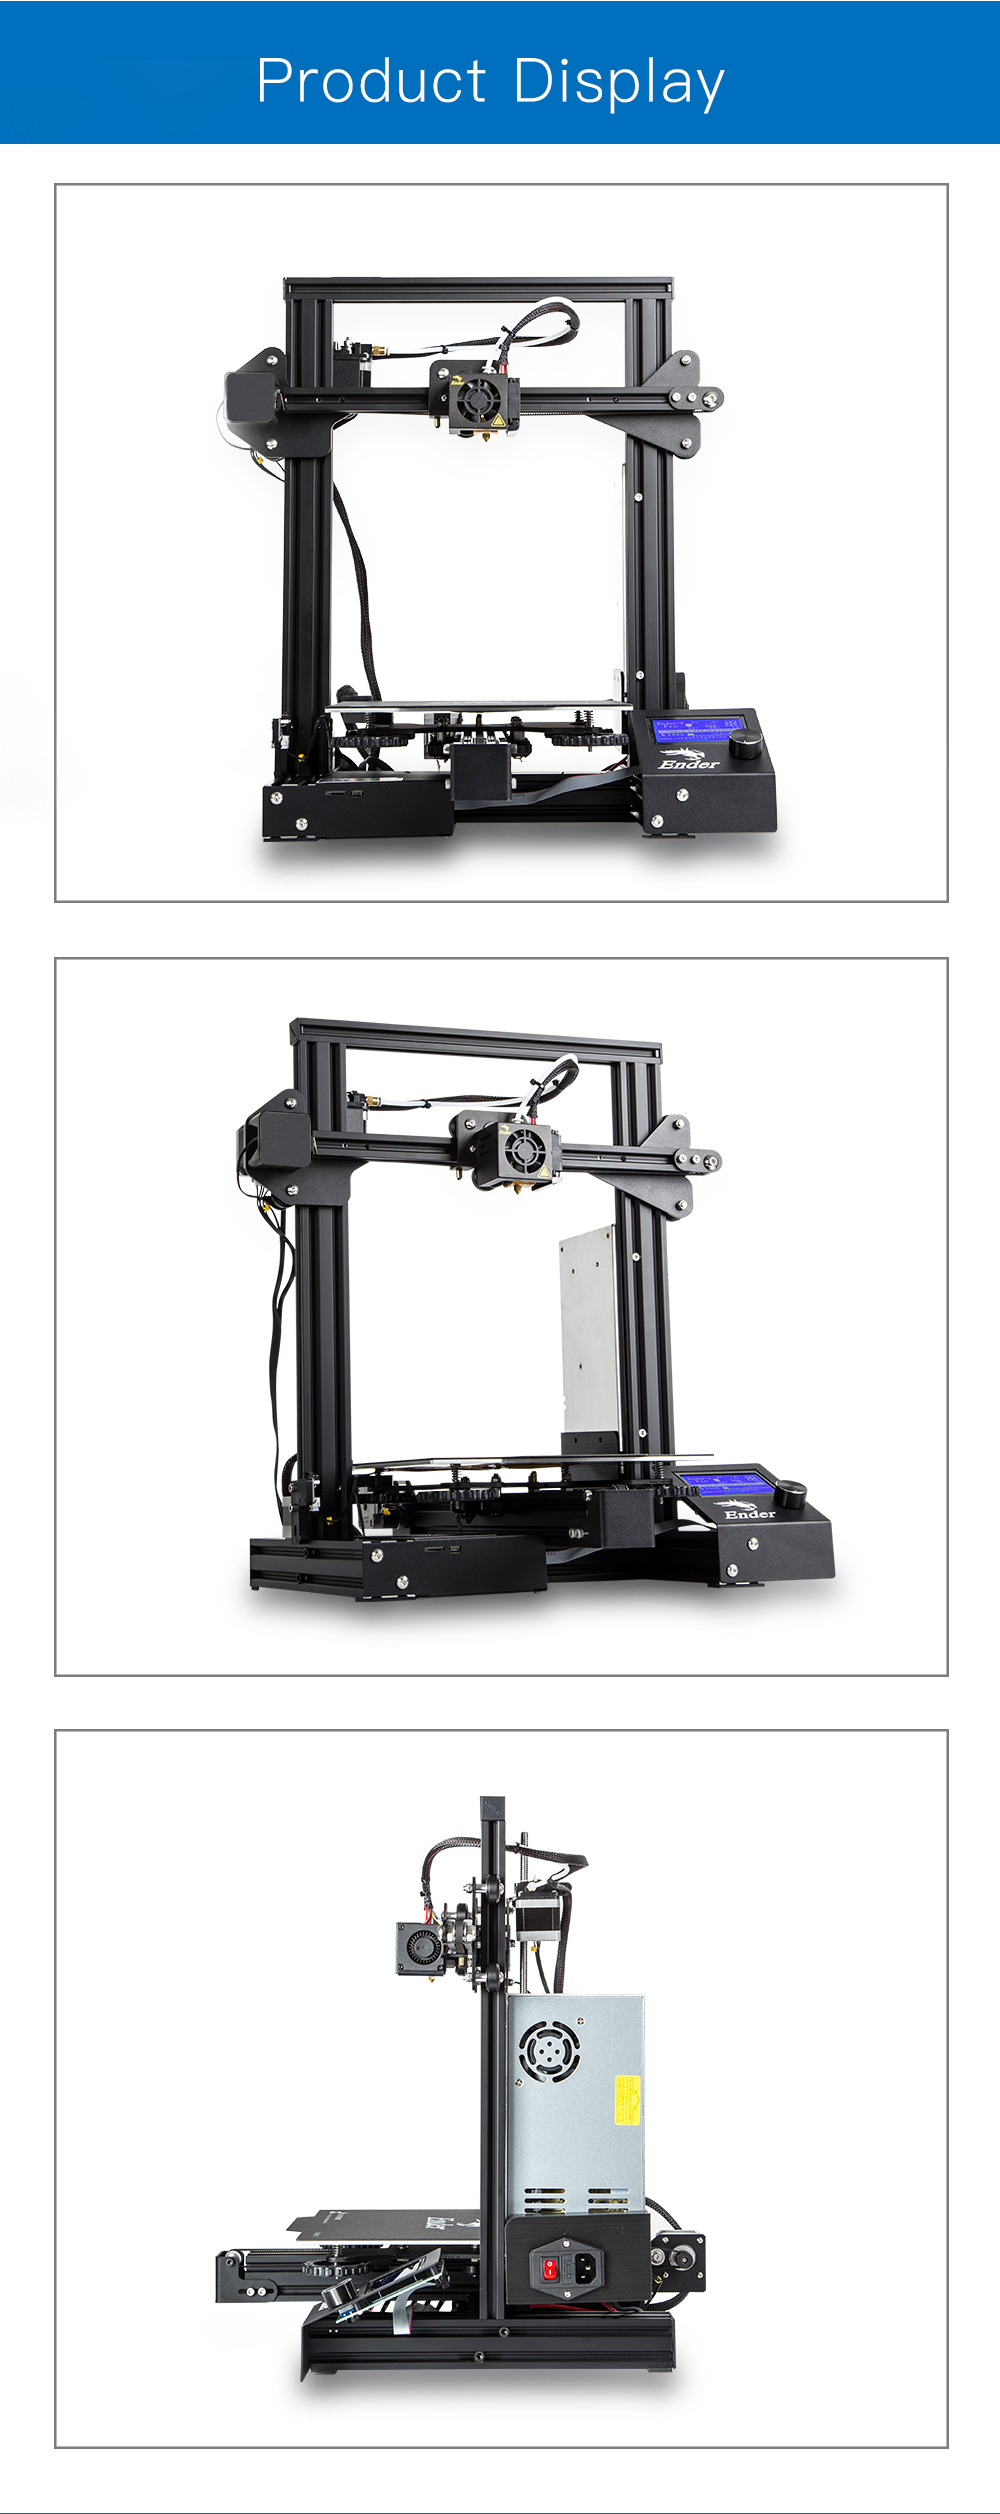 Creality 3D® Ender-3 Pro V-slot Prusa I3 DIY 3D Printer 220x220x250mm Printing Size With Magnetic Removable Platform Sticker/Power Resume Function/Off 14